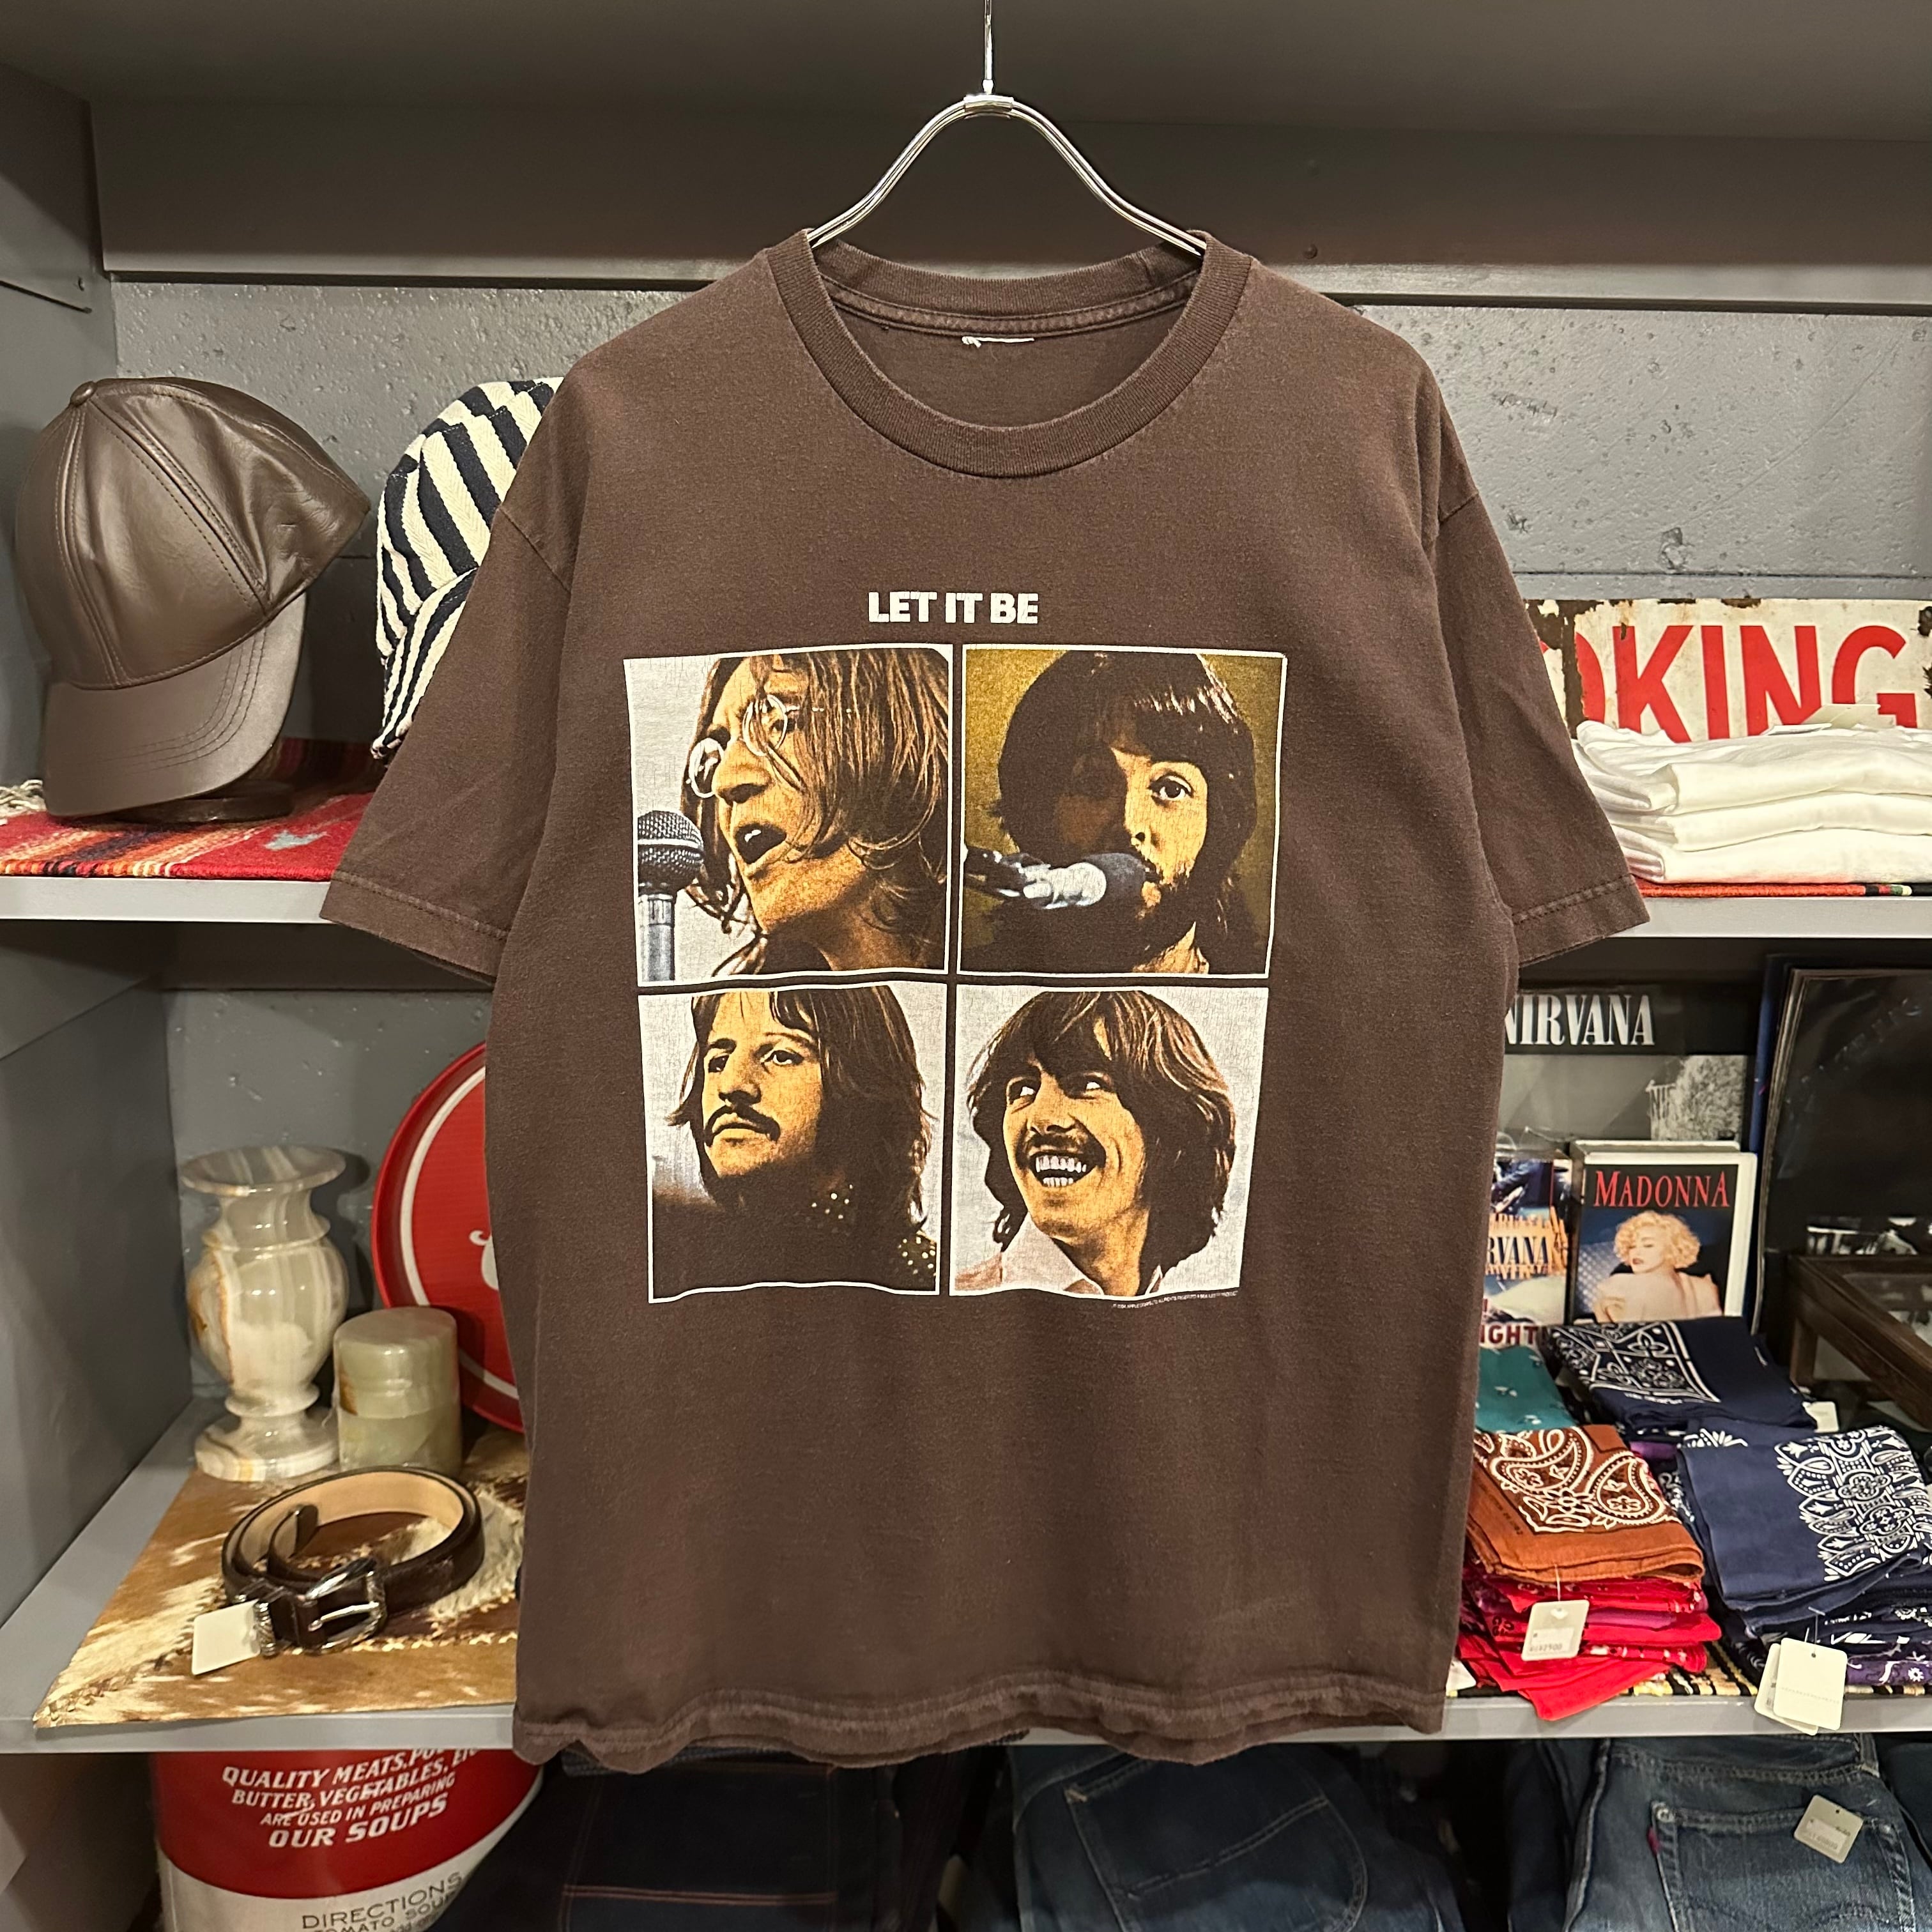 00s The Beatles T-Shirt